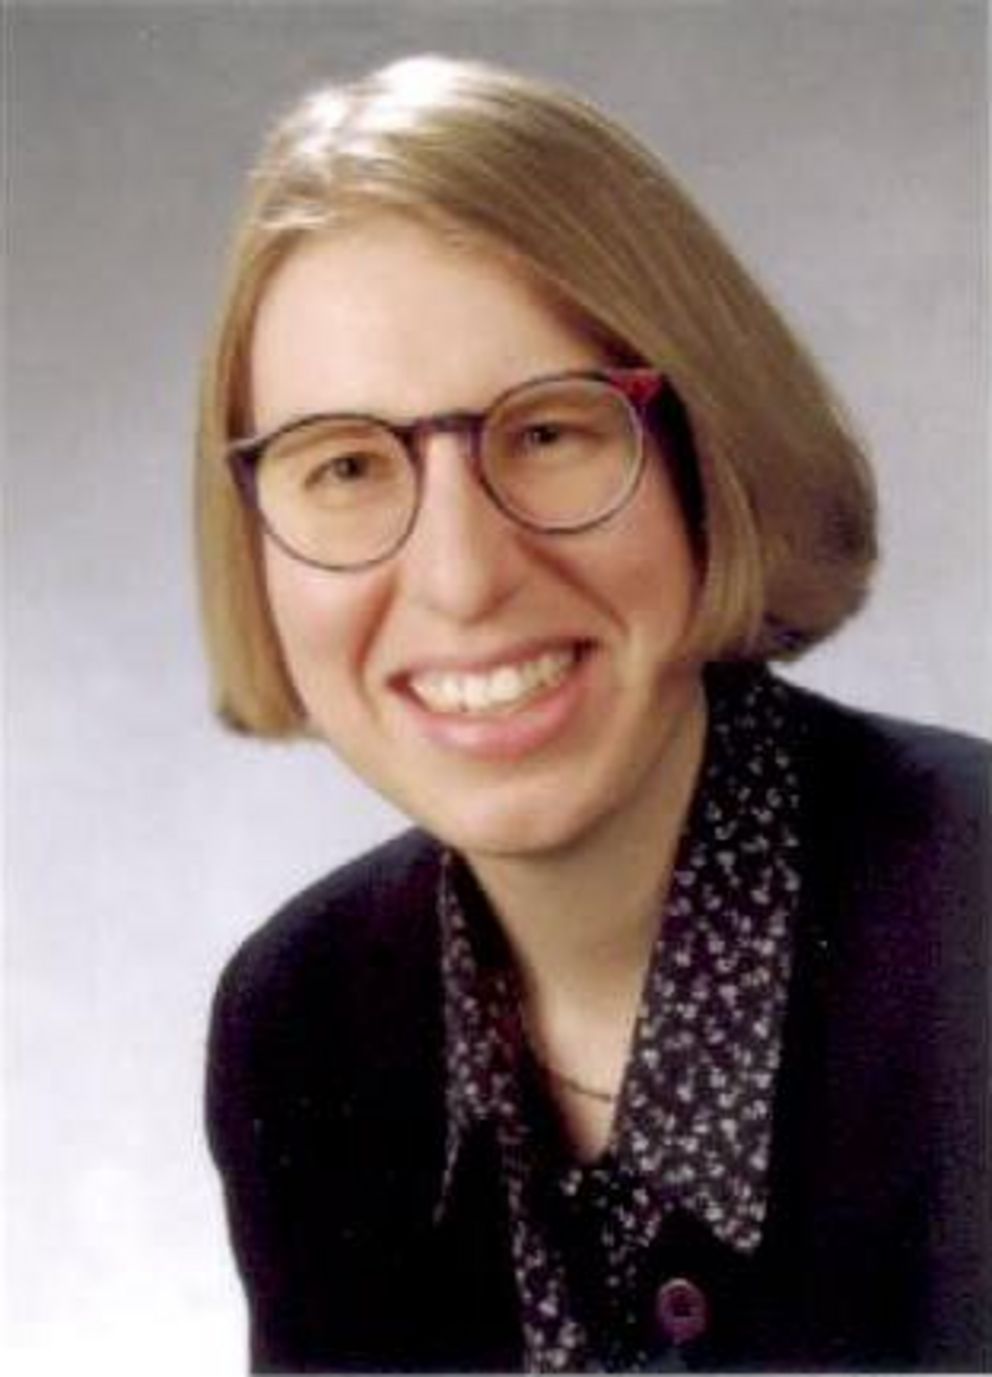 PD Dr. Ulrike Senger